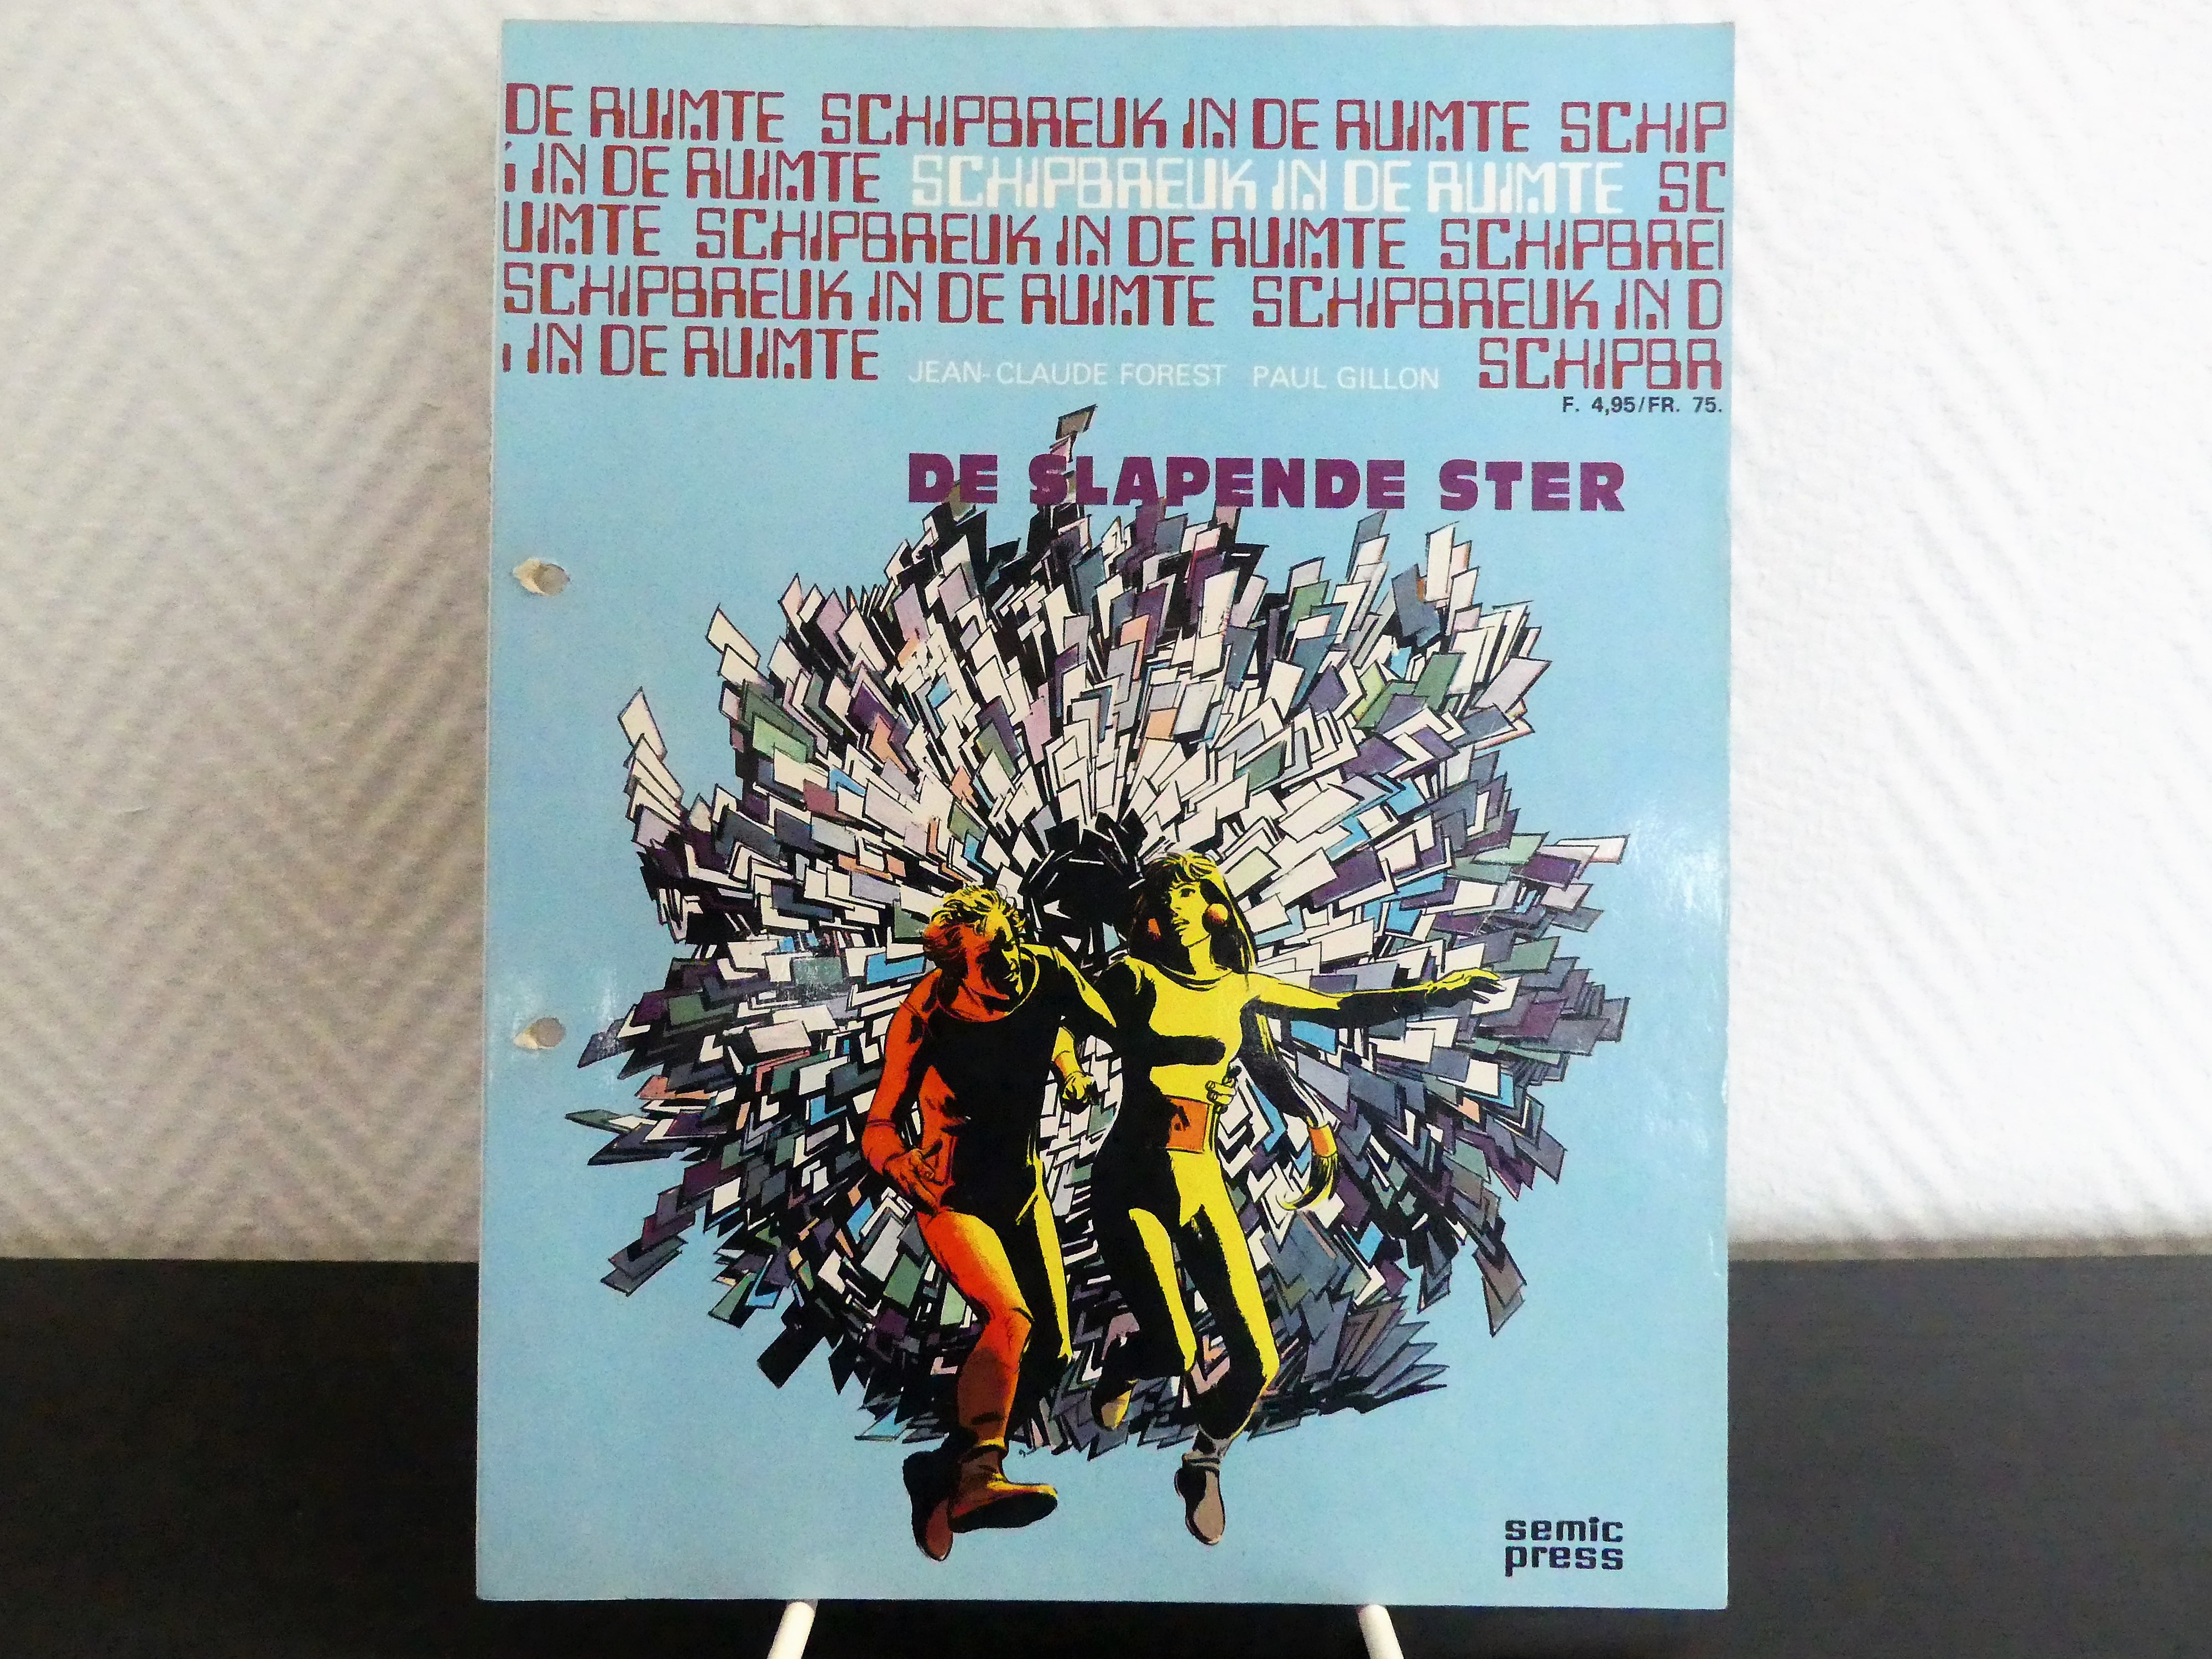 Stripalbum Schipbreuk in de ruimte, "De slapende ster" 1975